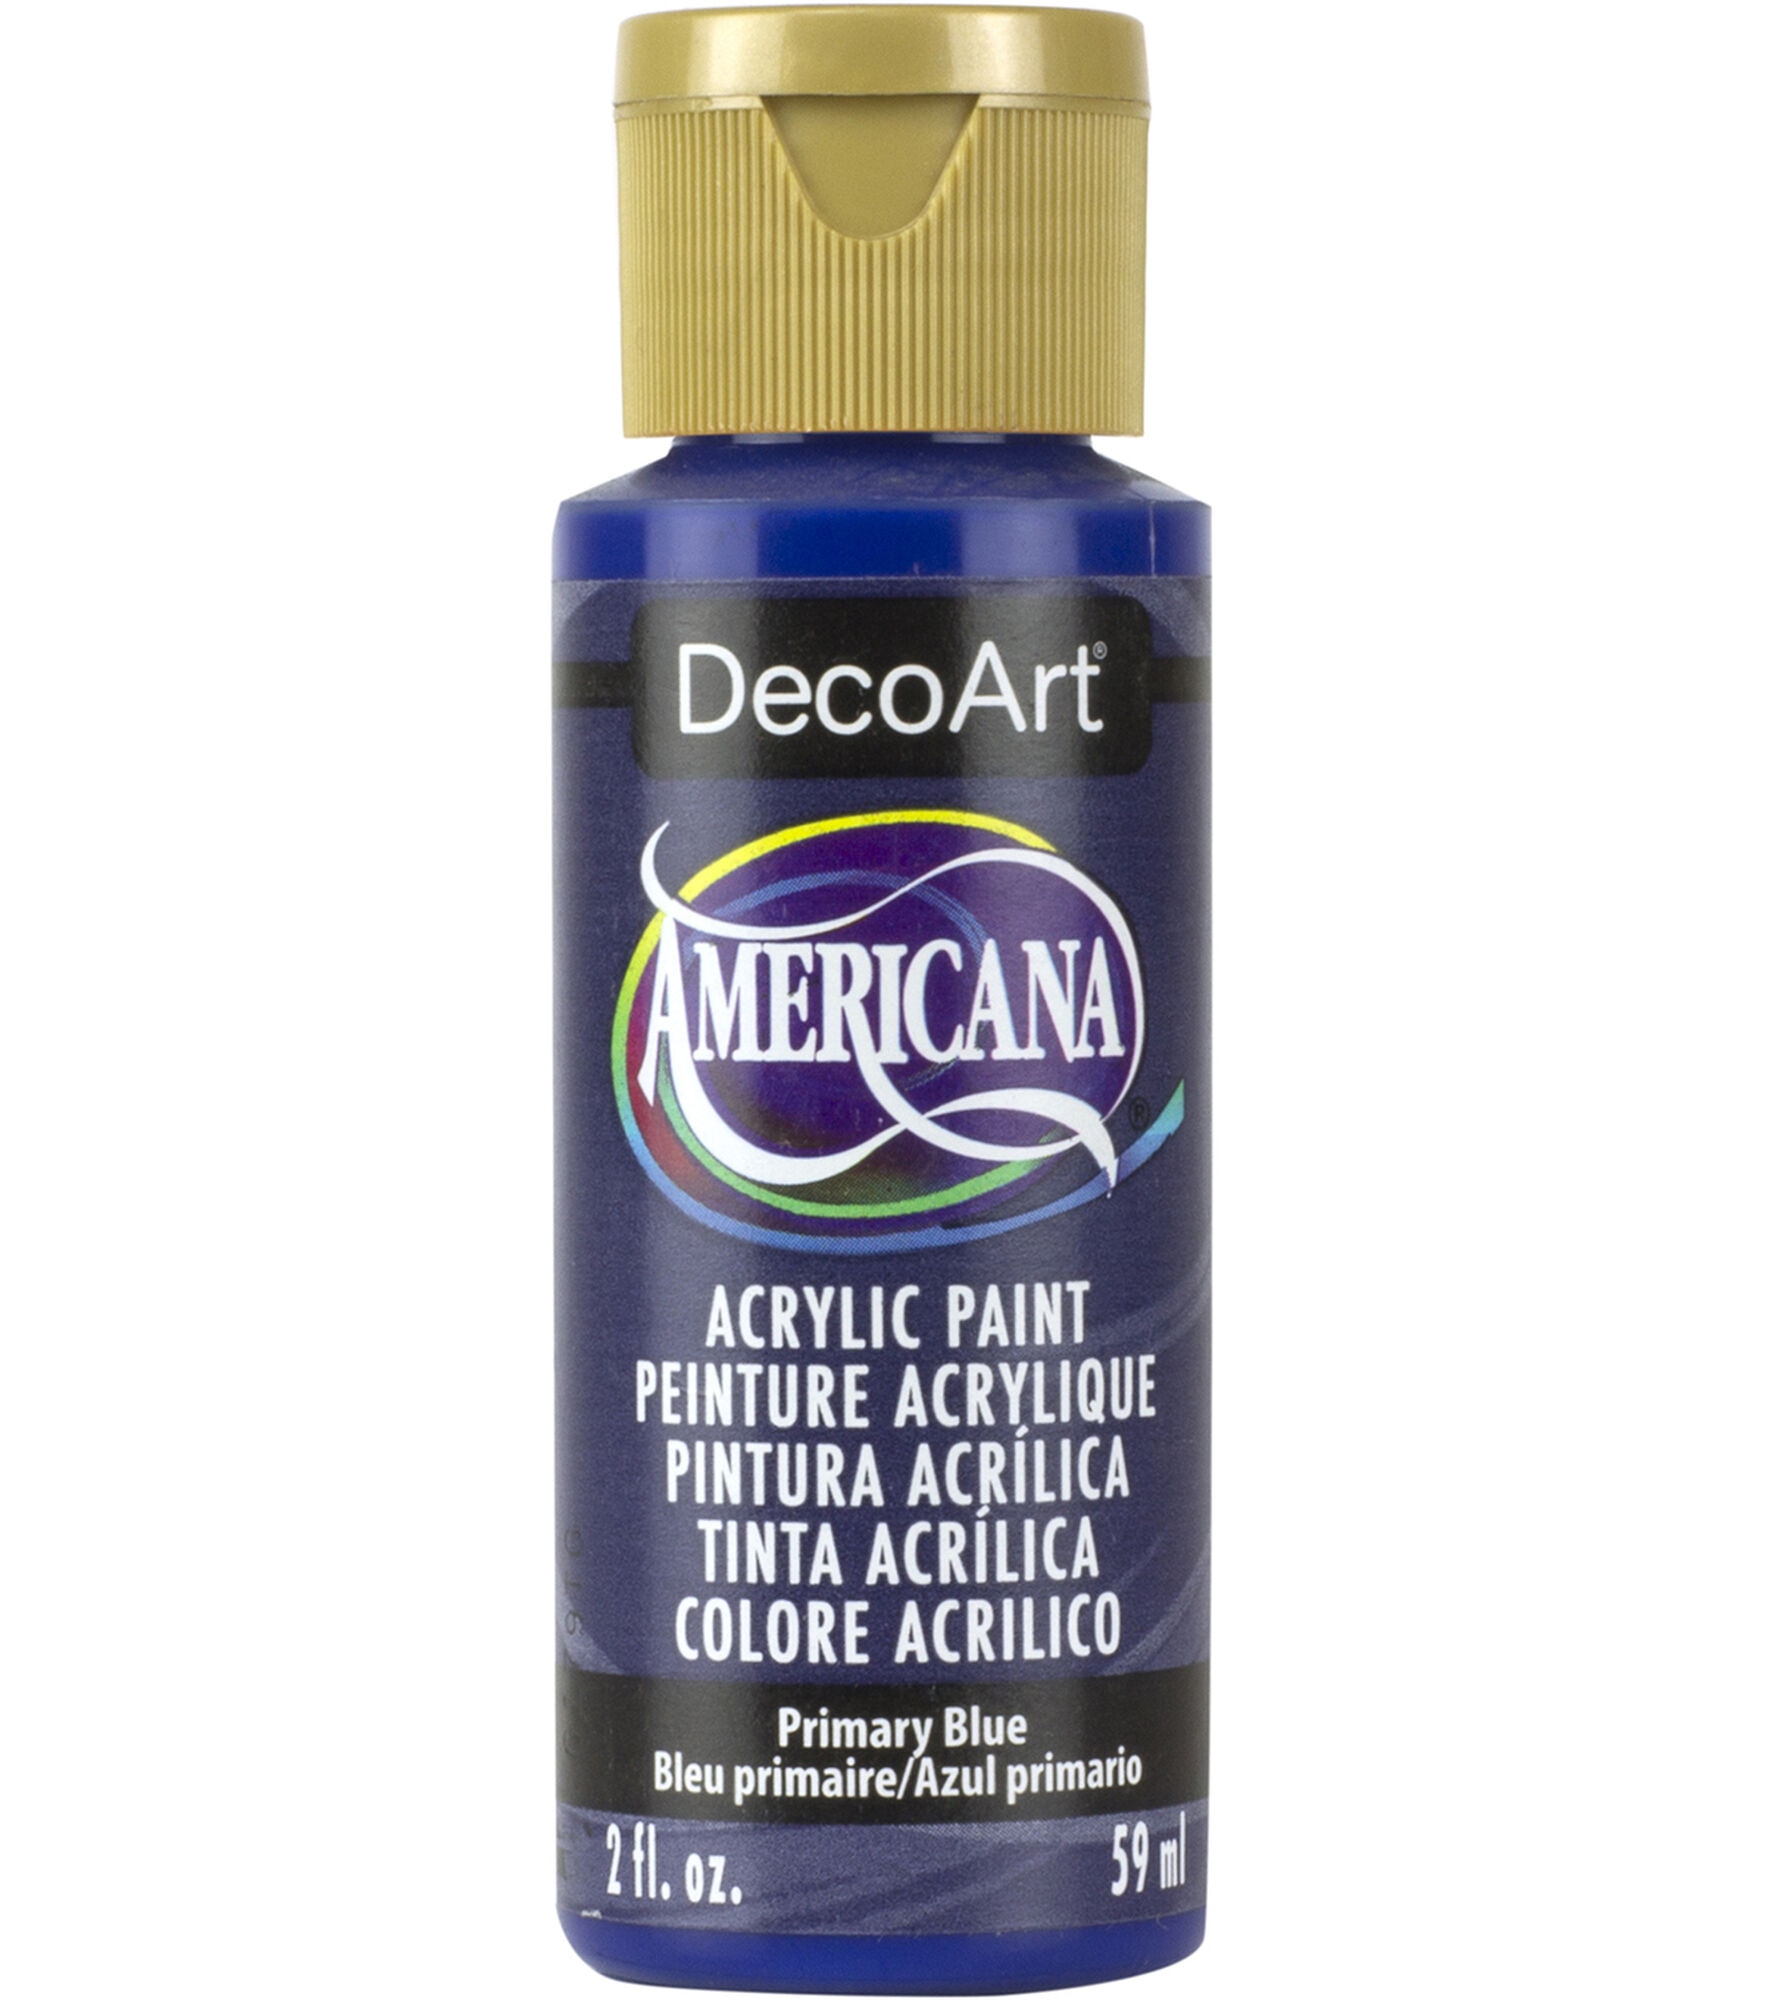 DecoArt Americana Acrylic 2oz Paint, Primary Blue, hi-res